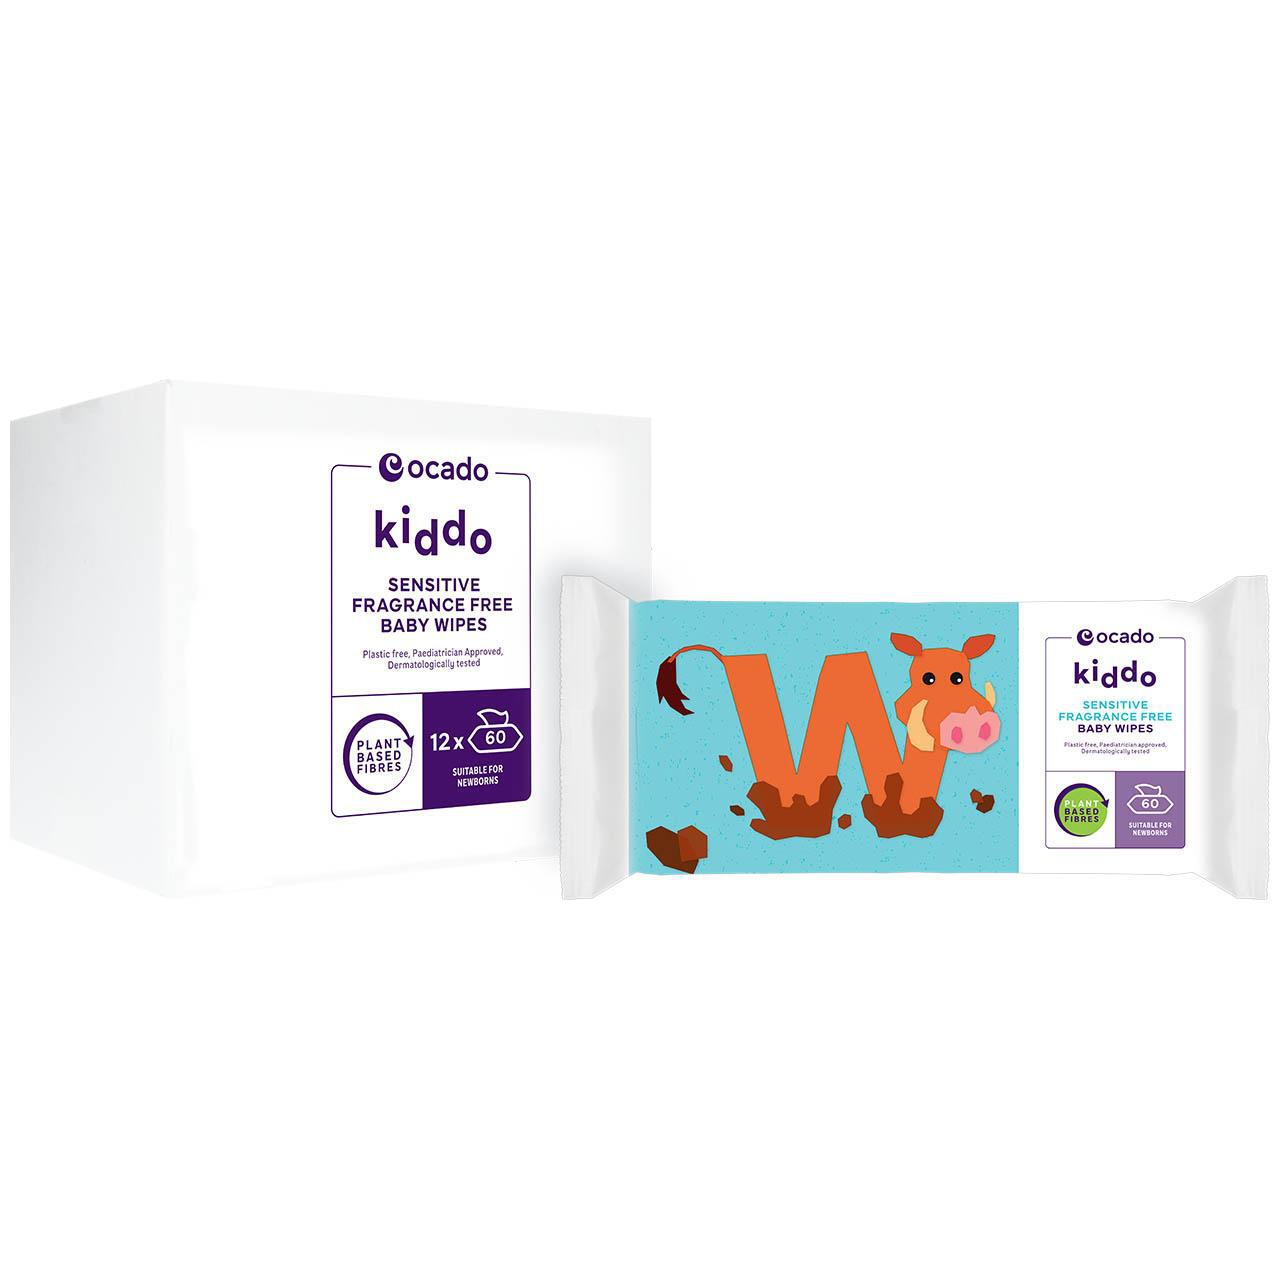 Ocado Kiddo Sensitive Fragrance Free Baby Wipes, Jumbo 12 x 60 per pack